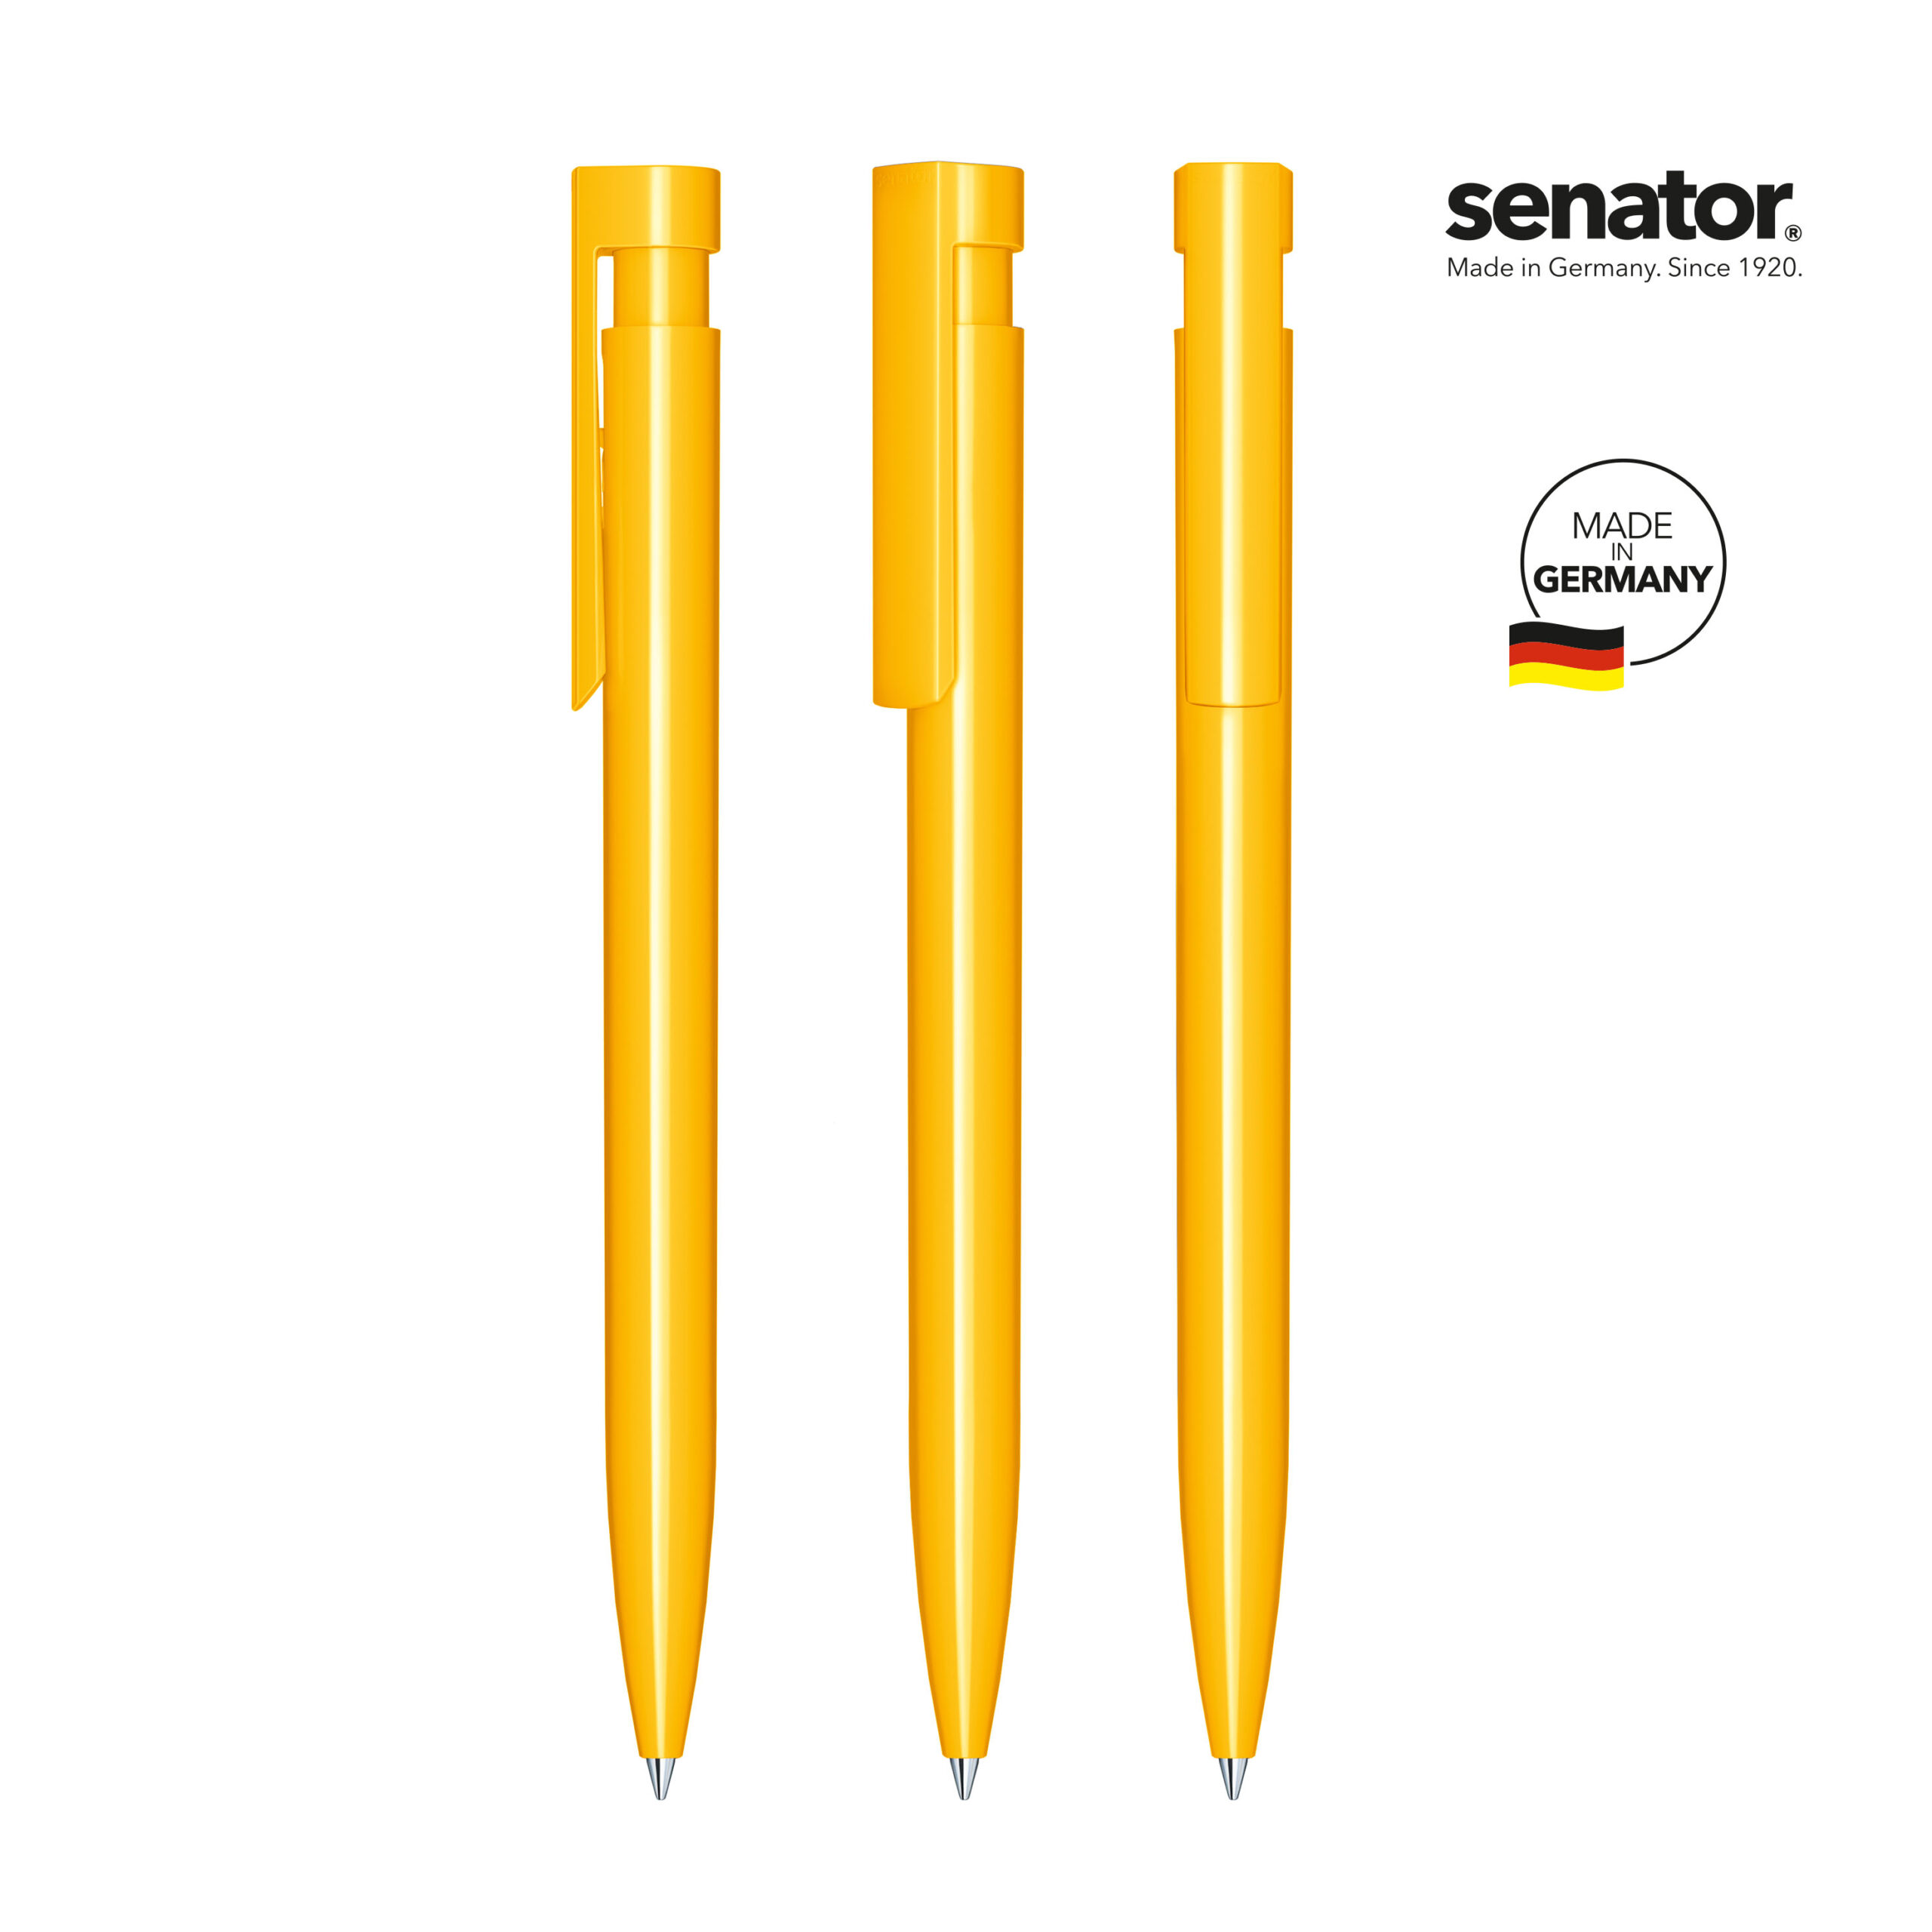 2915-senator-liberty-polished-pms-7408-5-p